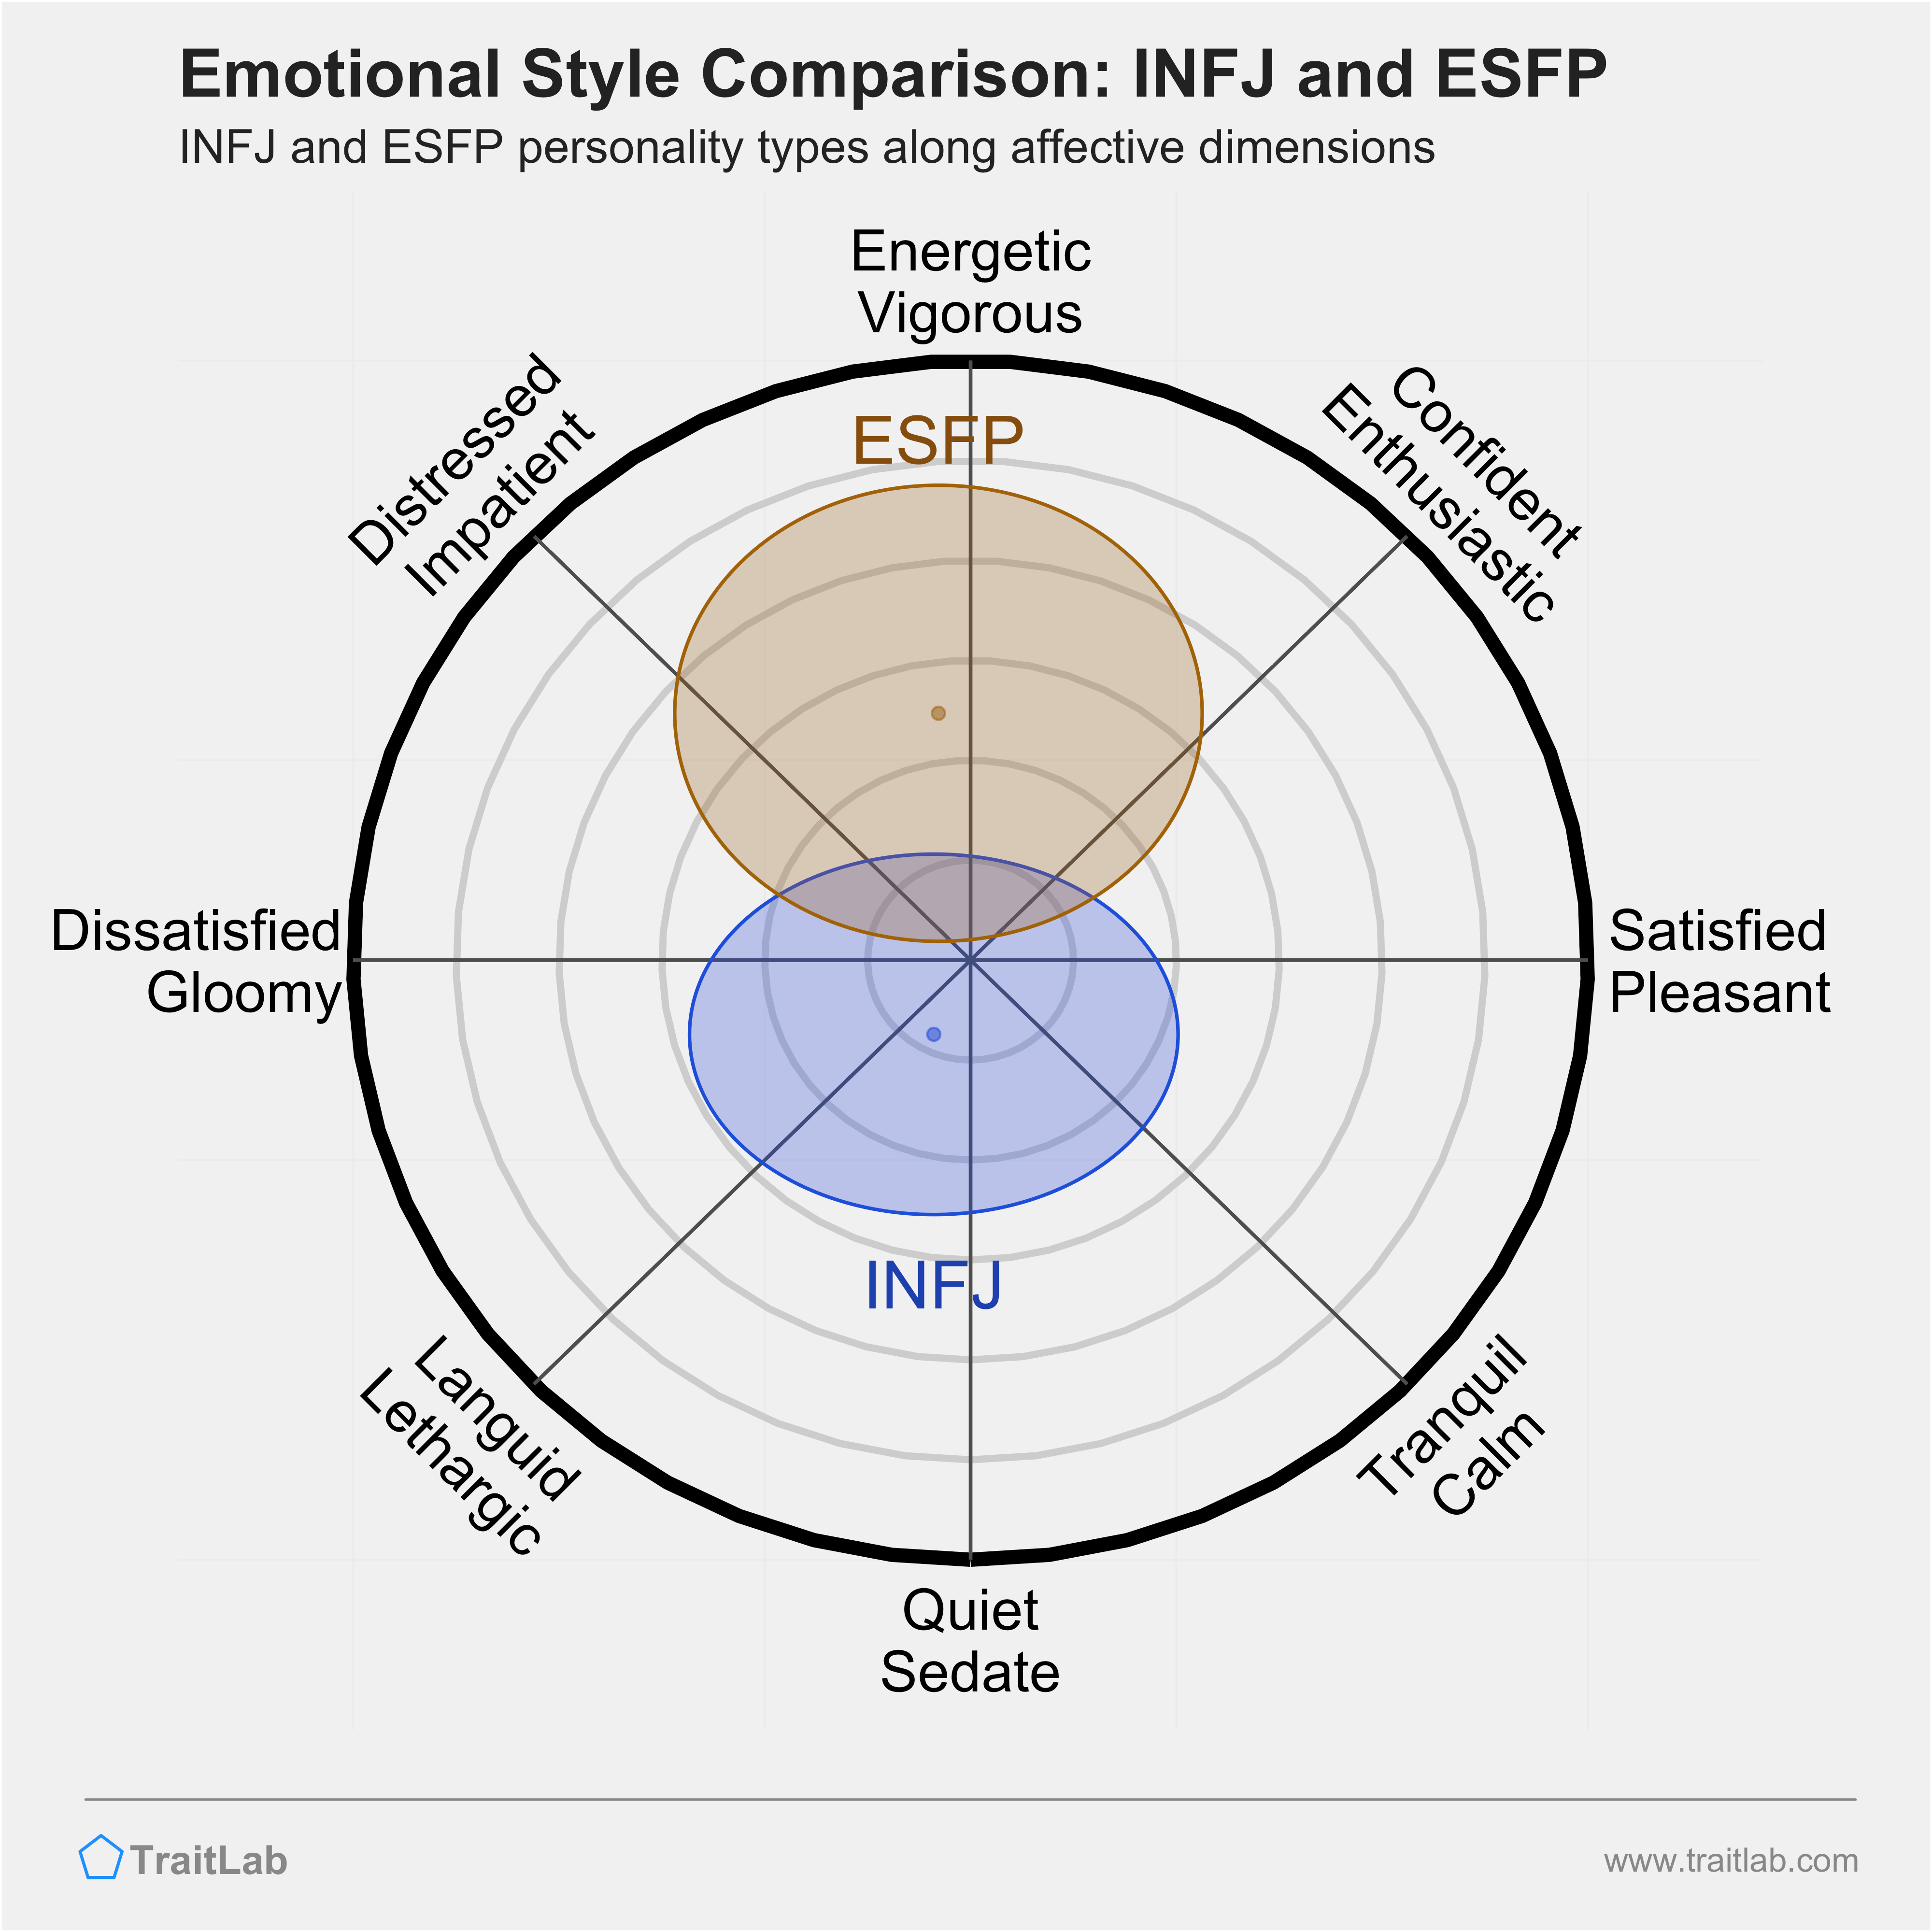 INFJ and ESFP comparison across emotional (affective) dimensions